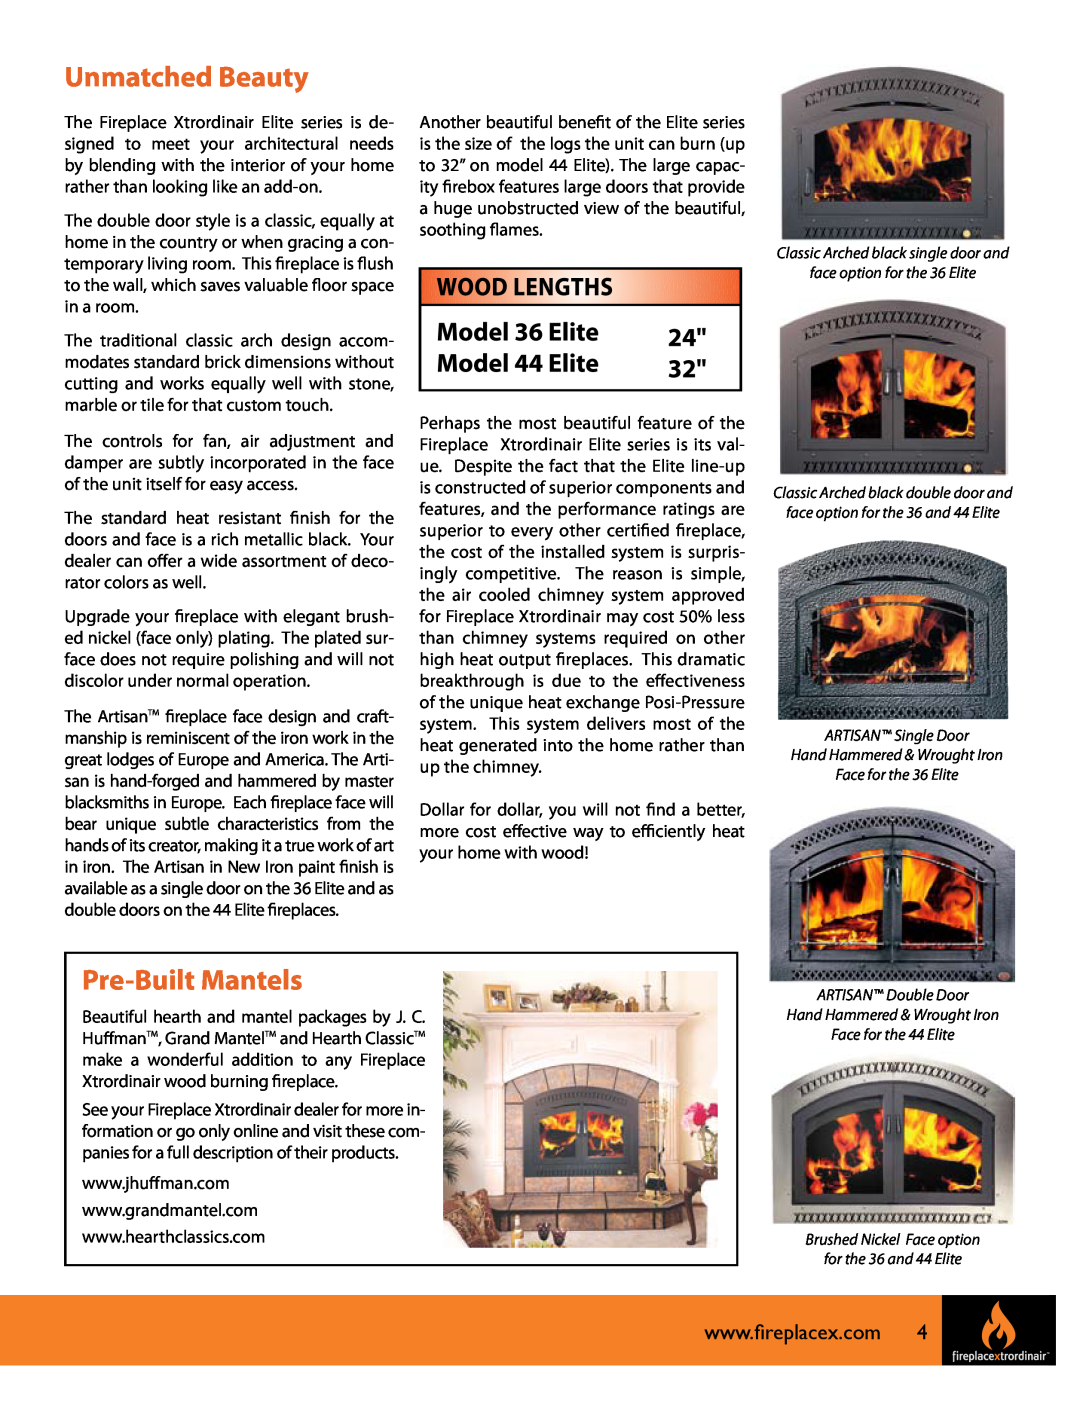 FireplaceXtrordinair FPX 44 manual Unmatched Beauty, Pre-BuiltMantels 